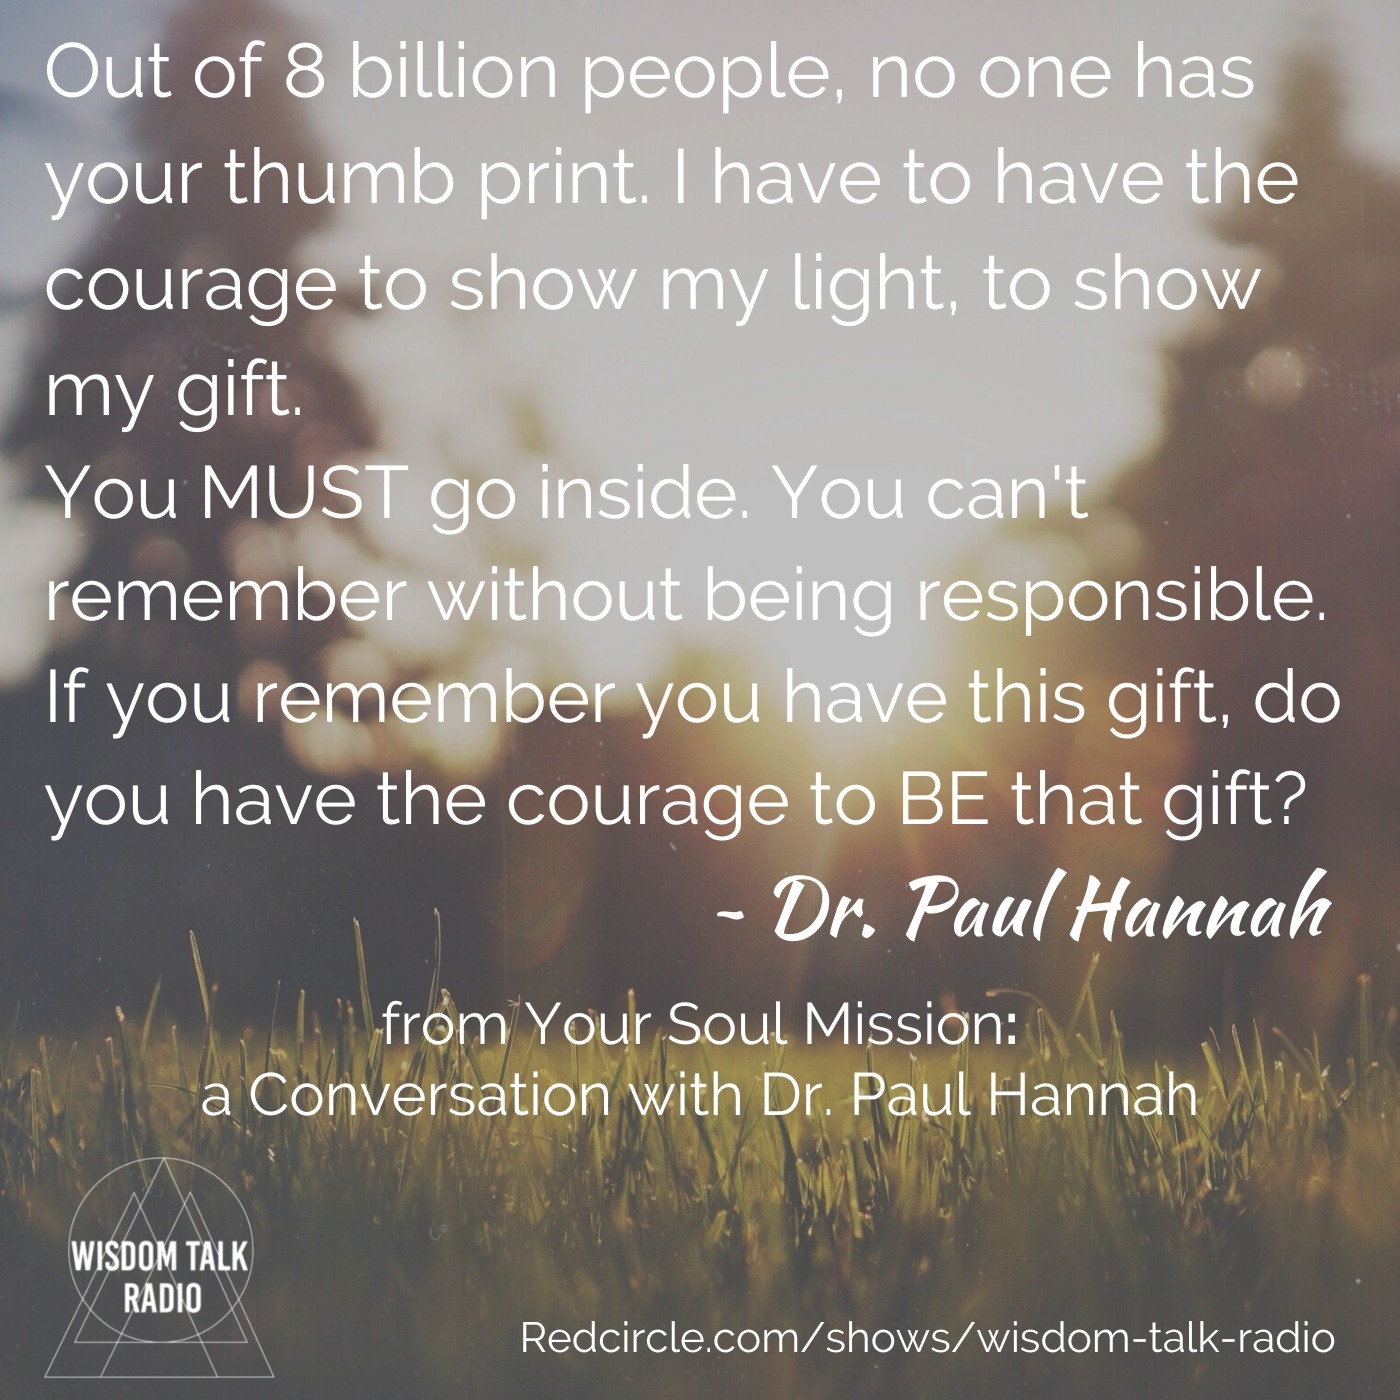 Your Soul Mission: a Conversation with Dr. Paul Hannah